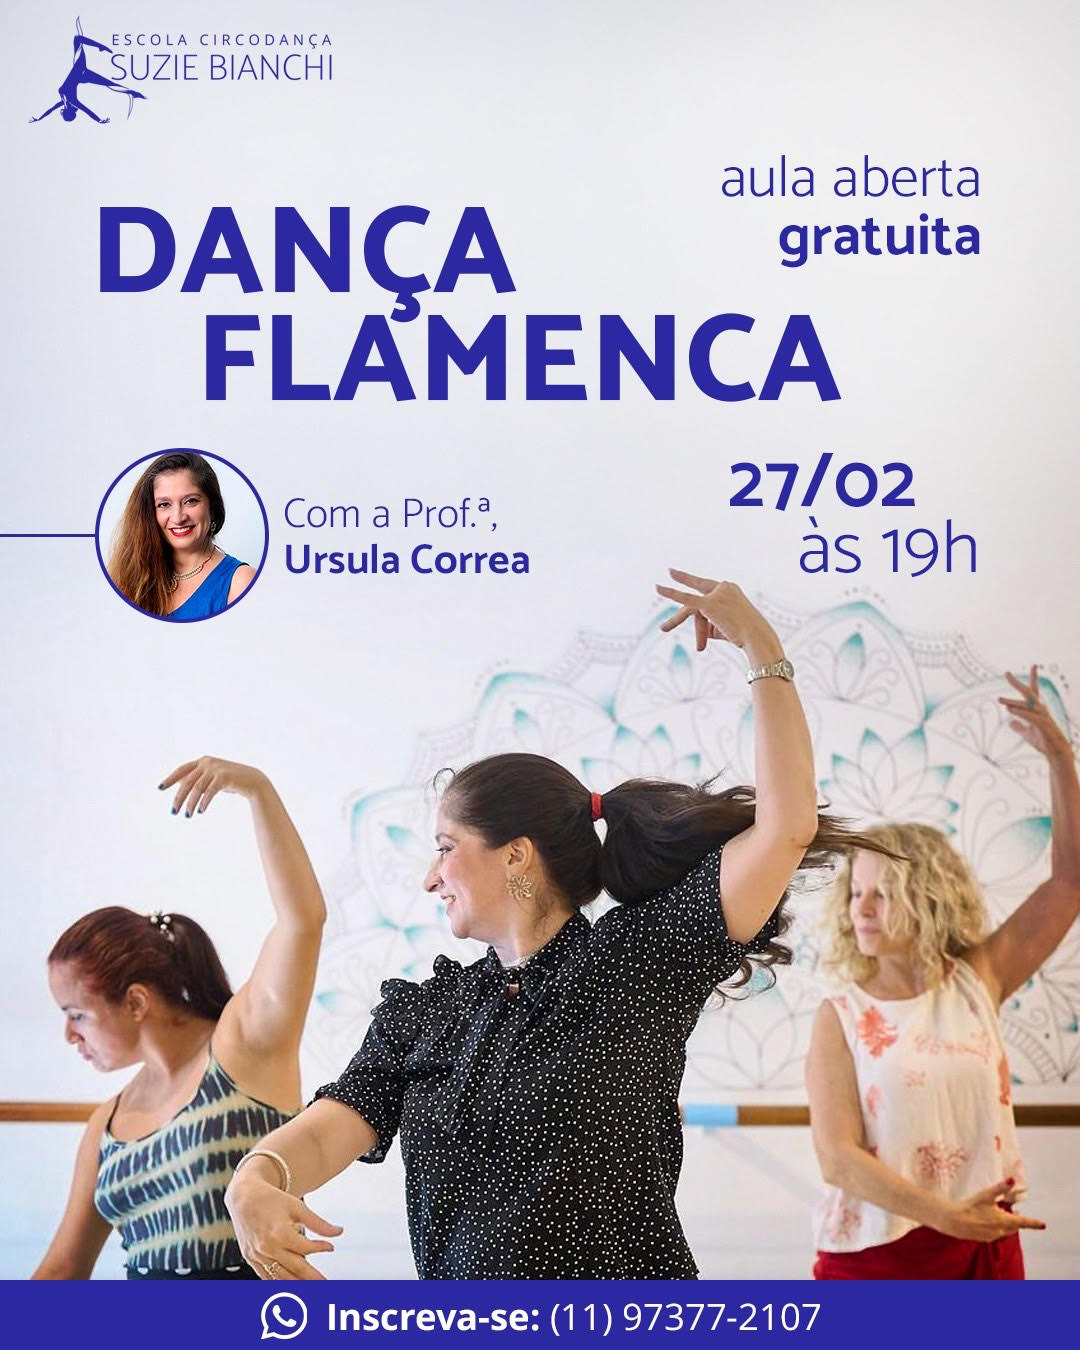 Aula Aberta de Dança Flamenca